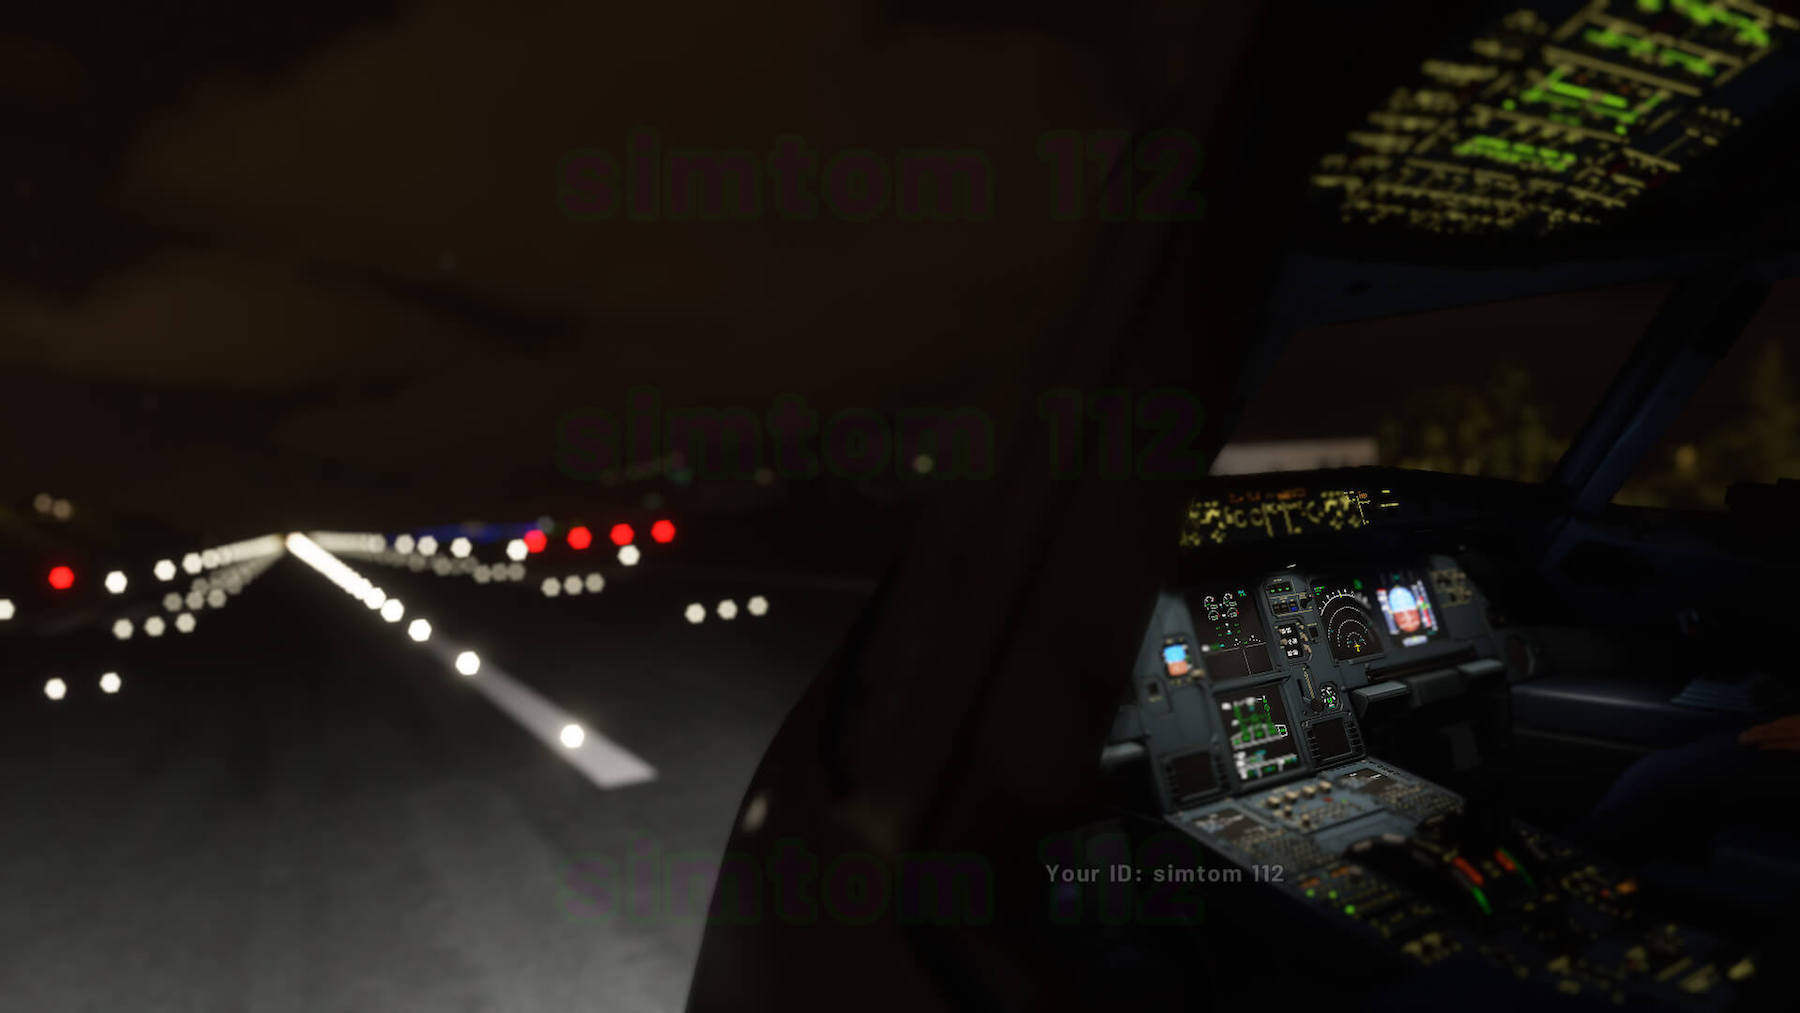 Microsoft Flight Simulator looks gorgeous in these latest alpha screenshots